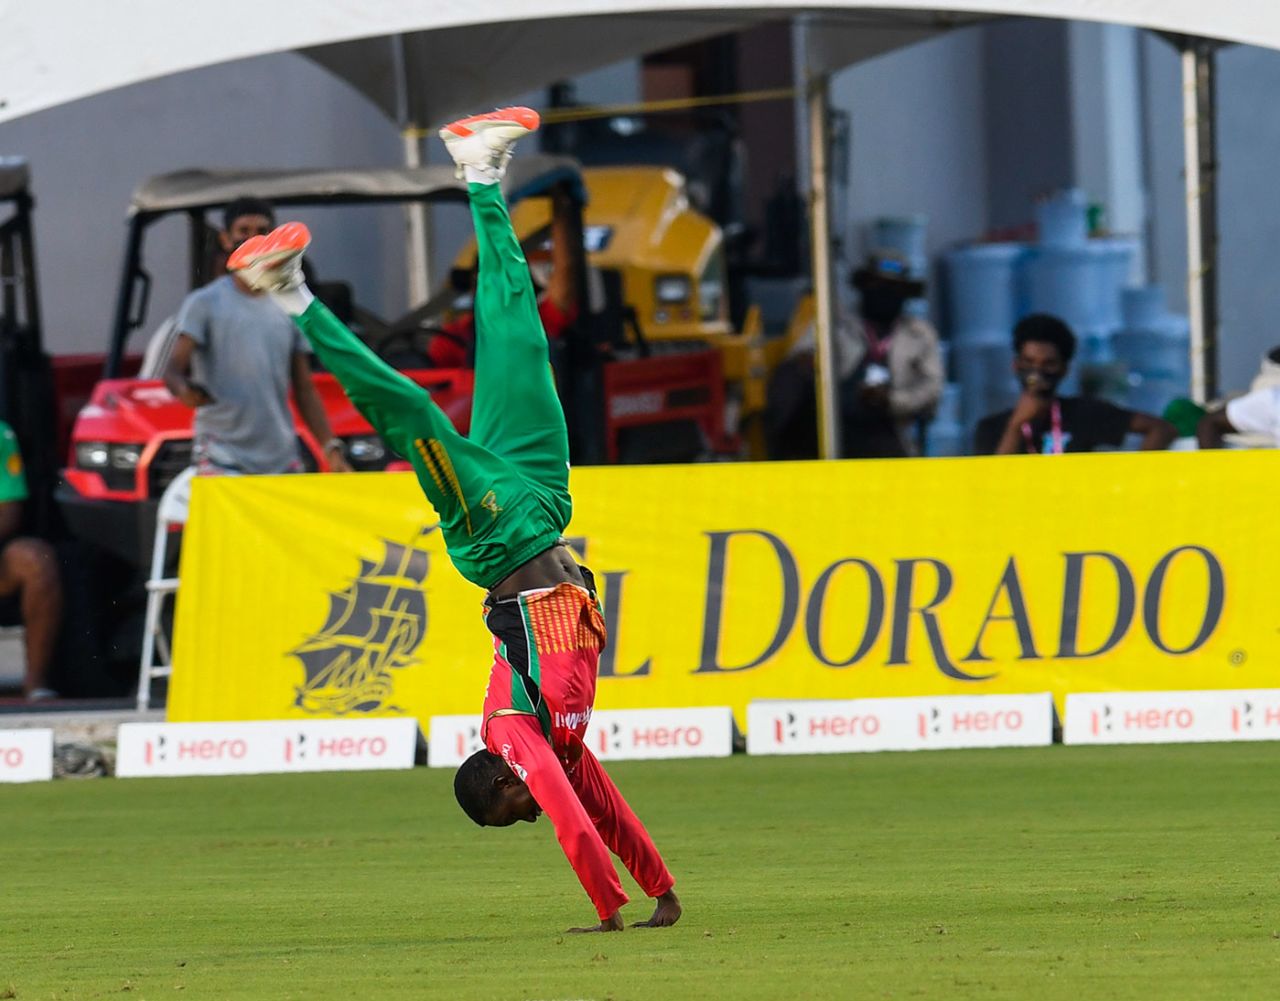 Kevin Sinclair celebrates the wicket of Shai Hope, Barbados Tridents v Guyana Amazon Warriors, CPL 2020, Trinidad, September 1, 2020